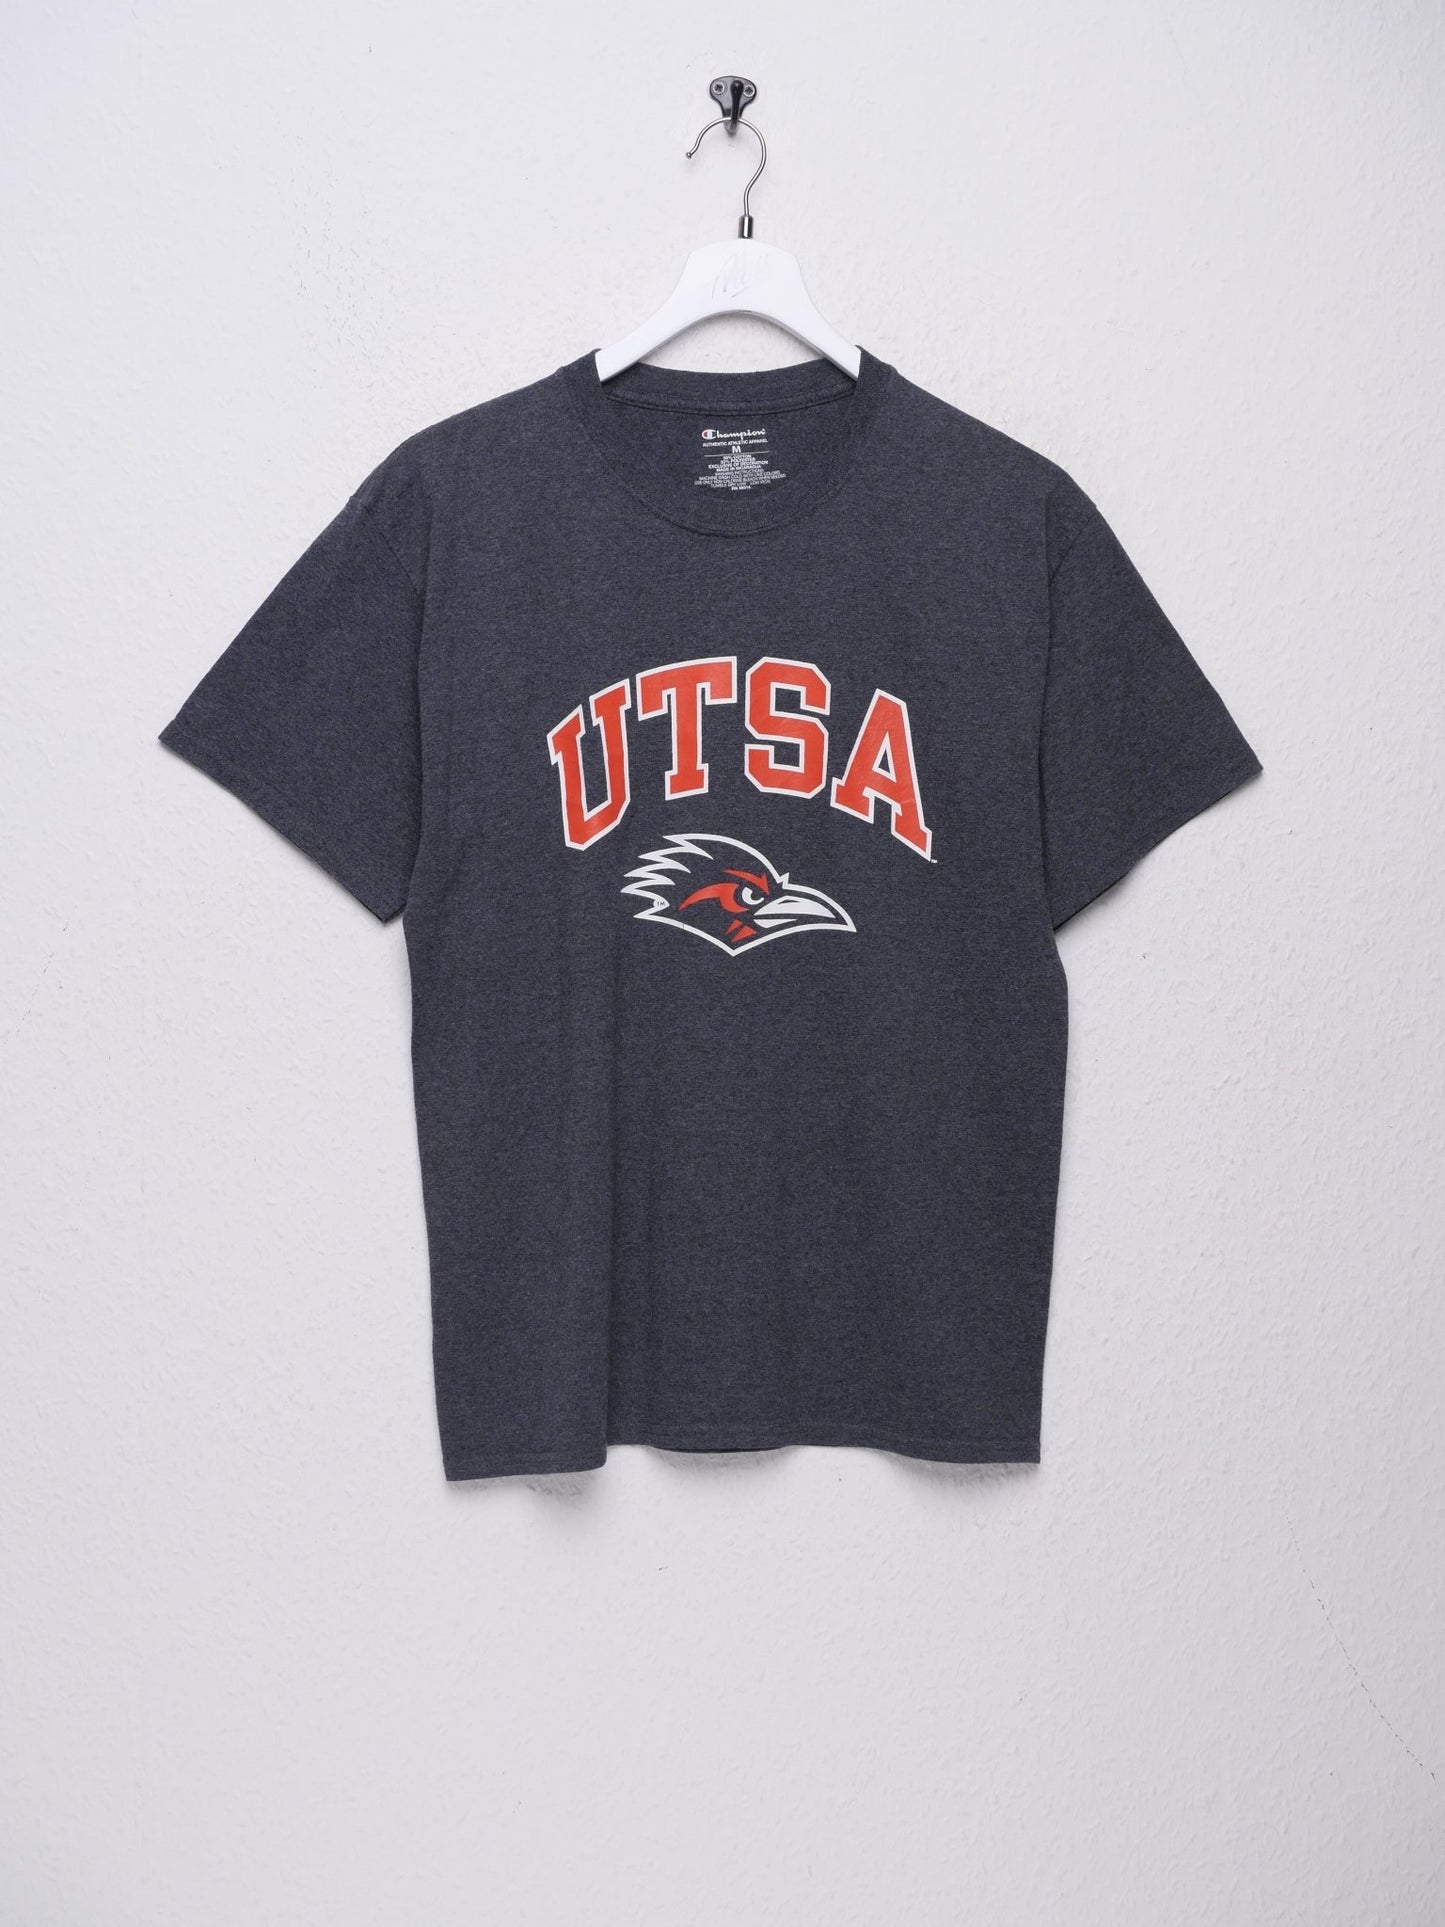 Champion embroidered Logo 'UTSA' grey Shirt - Peeces